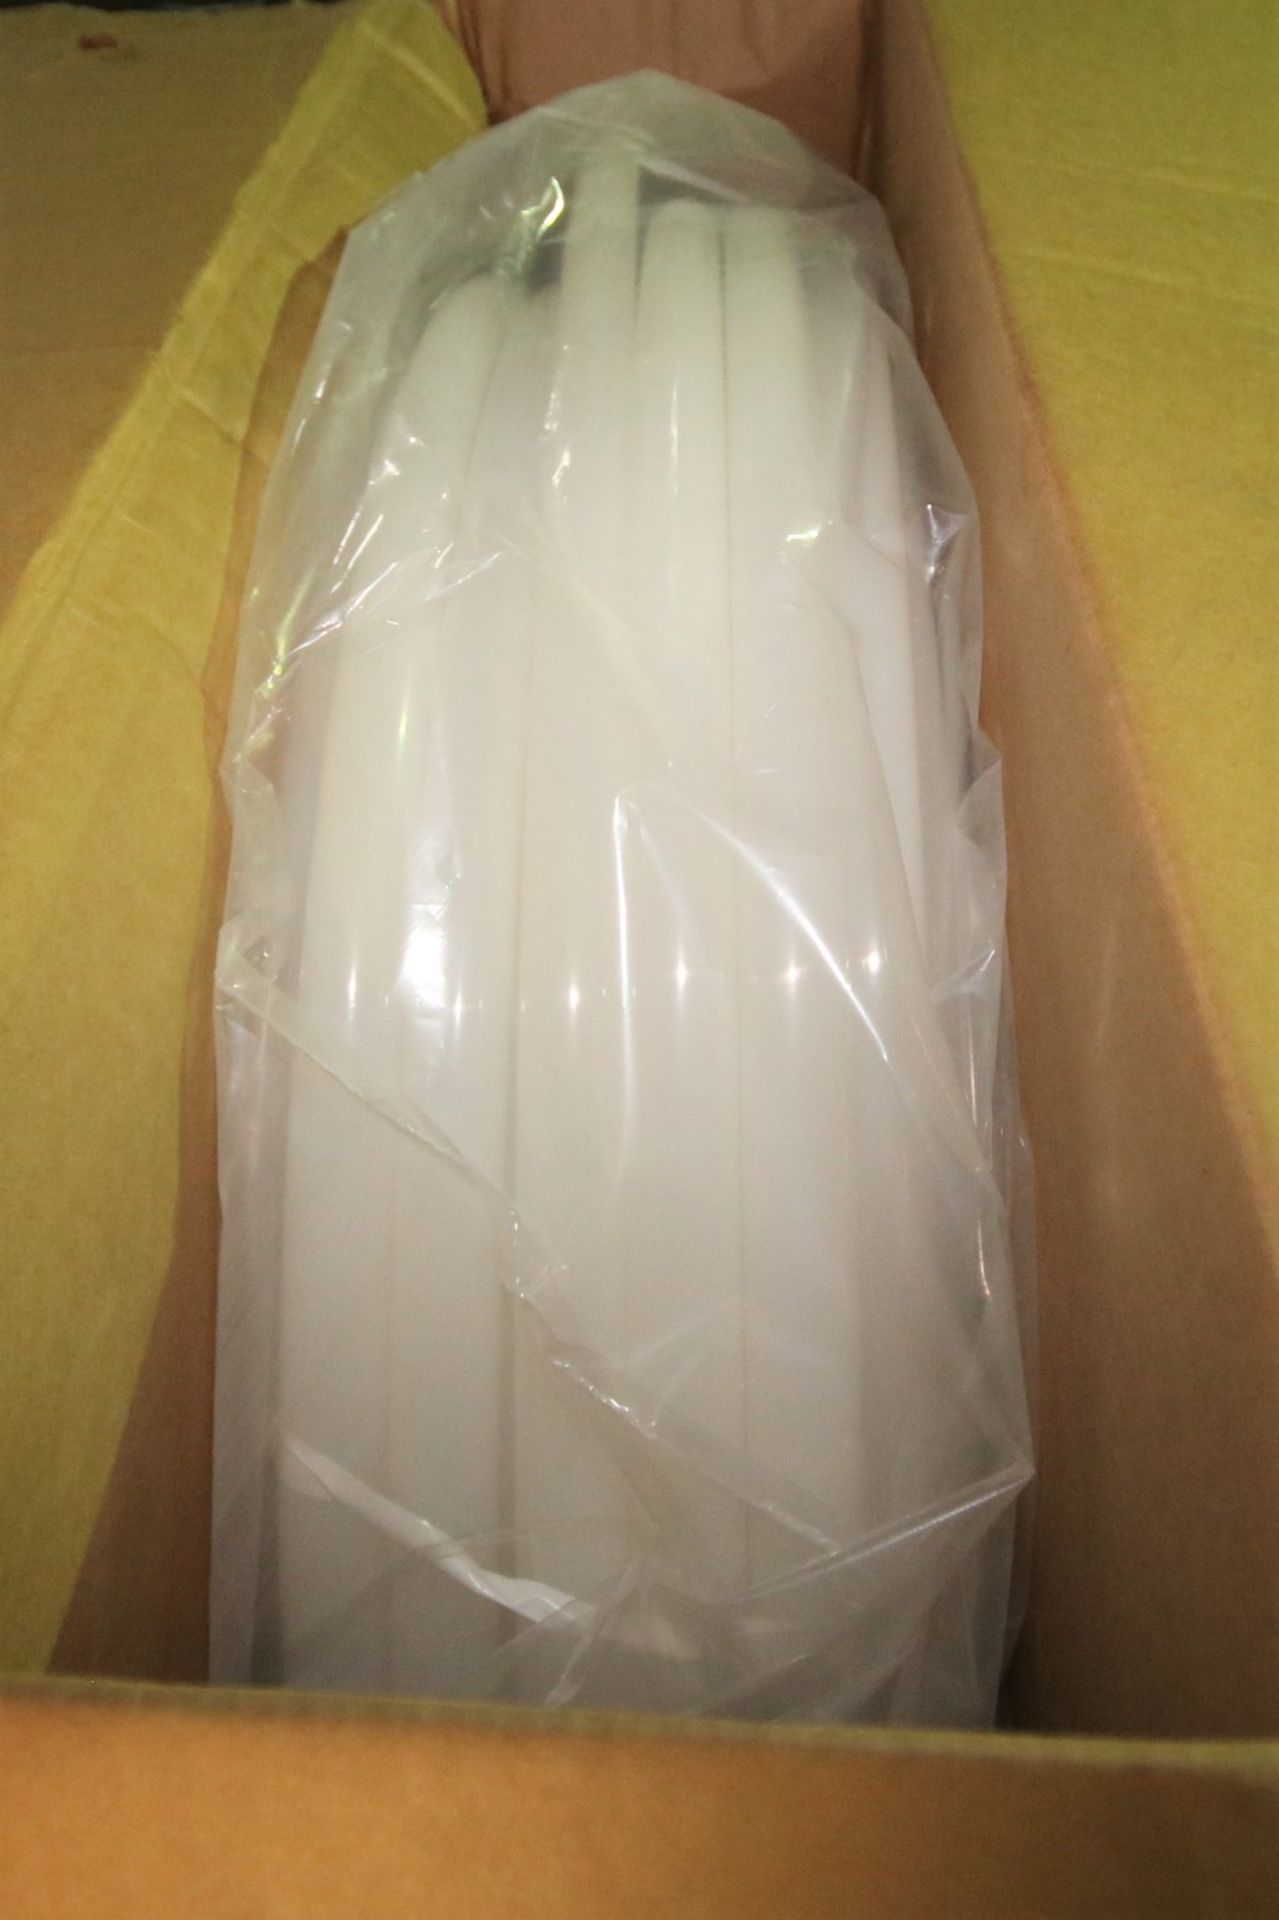 4 Boxes of 1" Plastic Tubing - (Low Density Polyethylene)